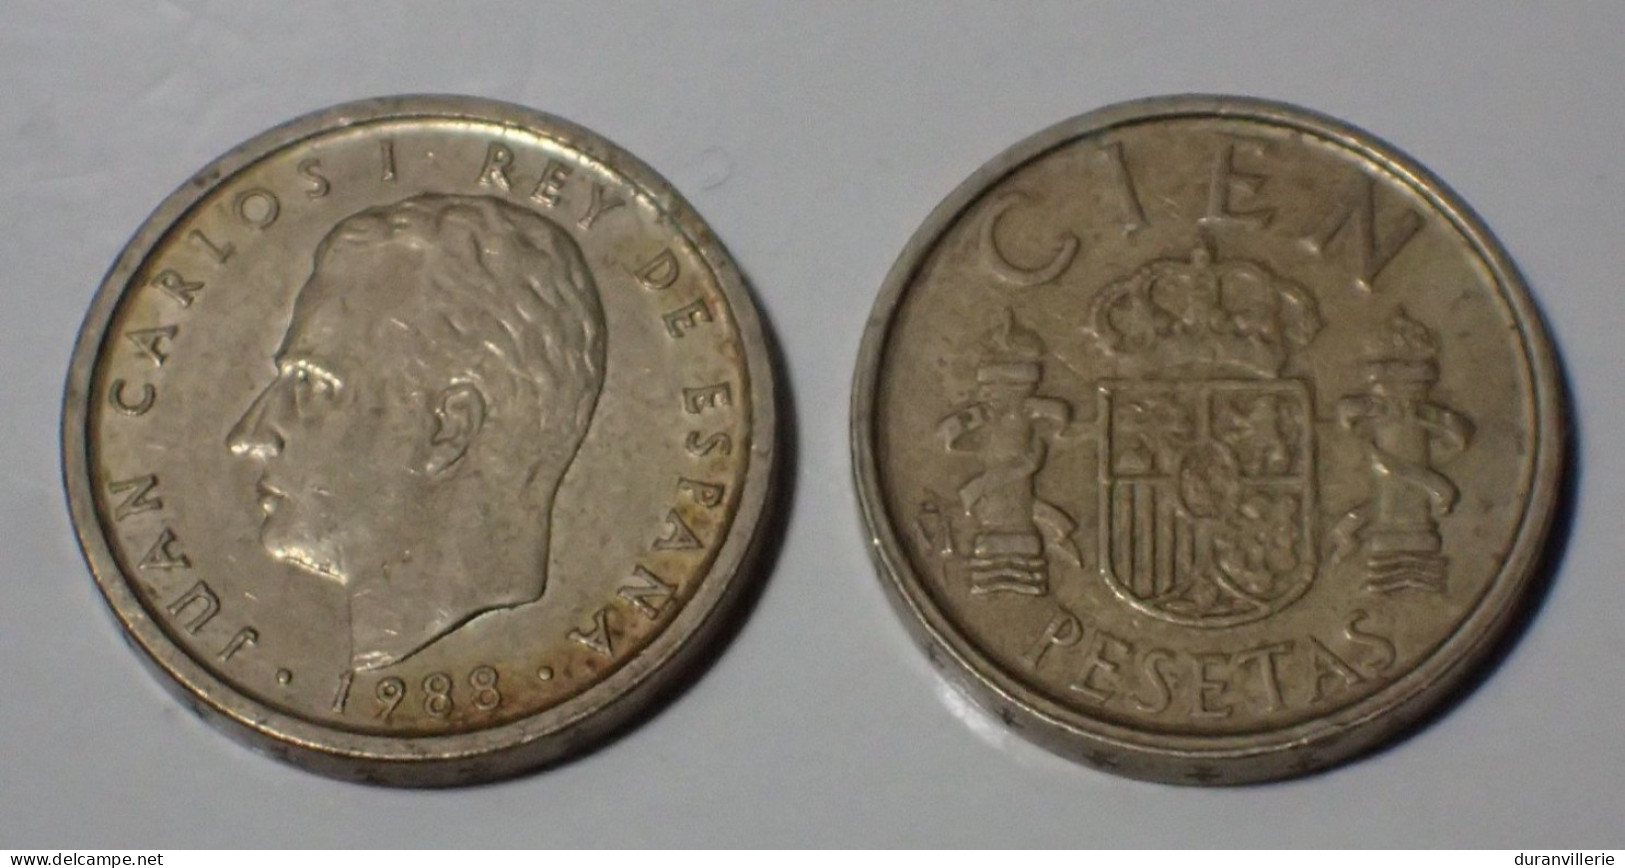 Spagna - Spain - Espana - Spanien 1988 - 100 Pesetas, KM 826 - 100 Peseta